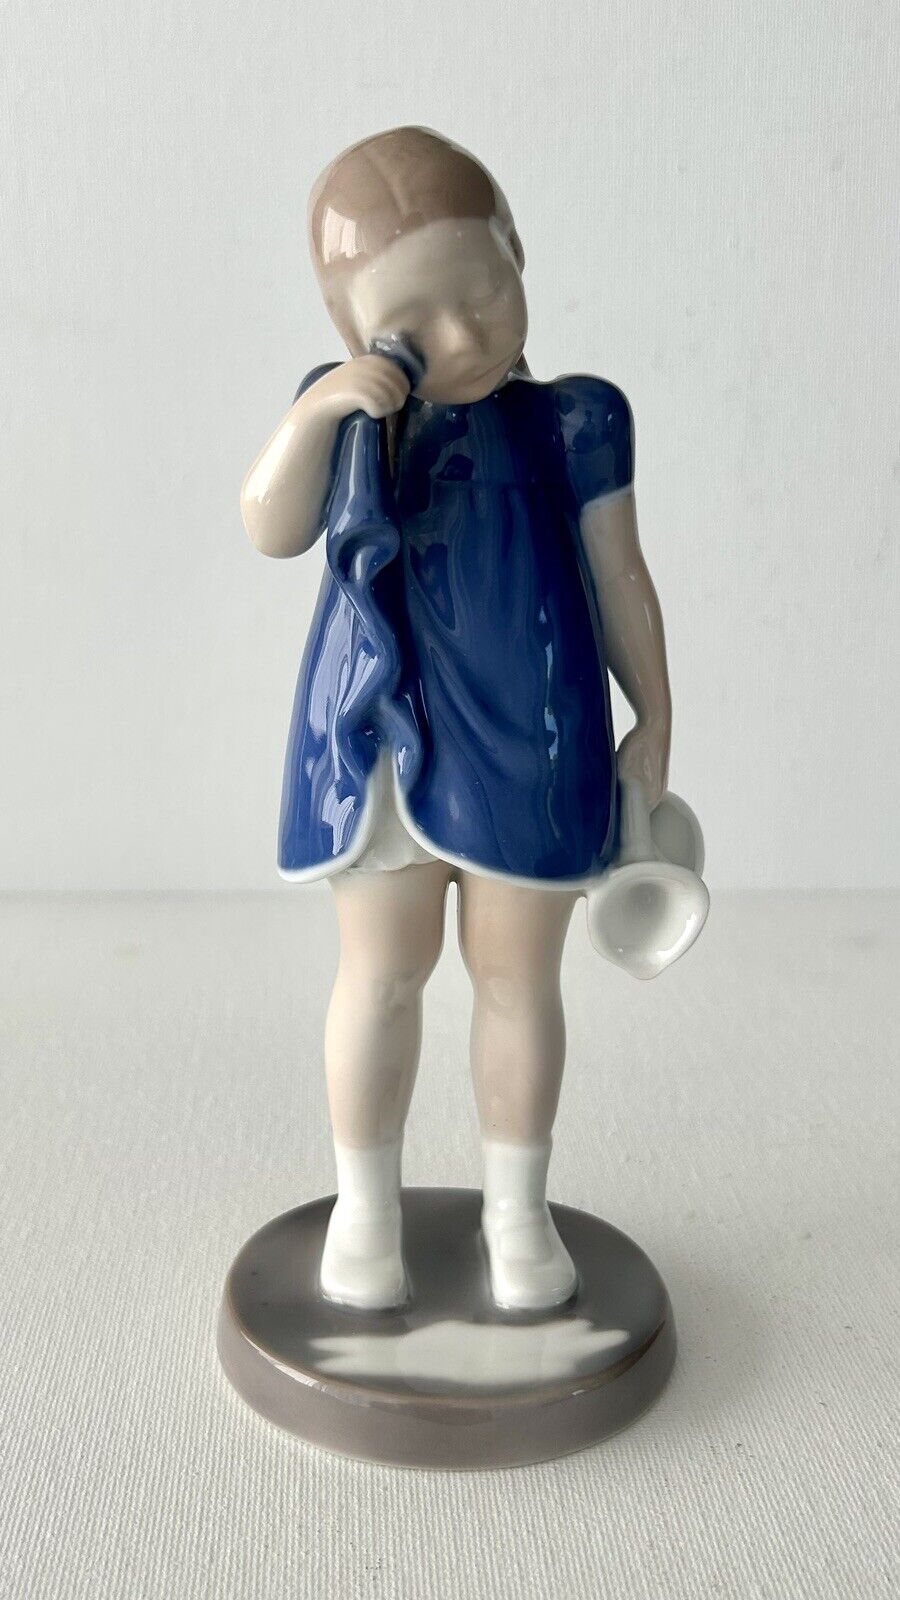 Vintage Bing Grondahl Porcelain Figurine Girl Crying Over Spilt Milk #2246